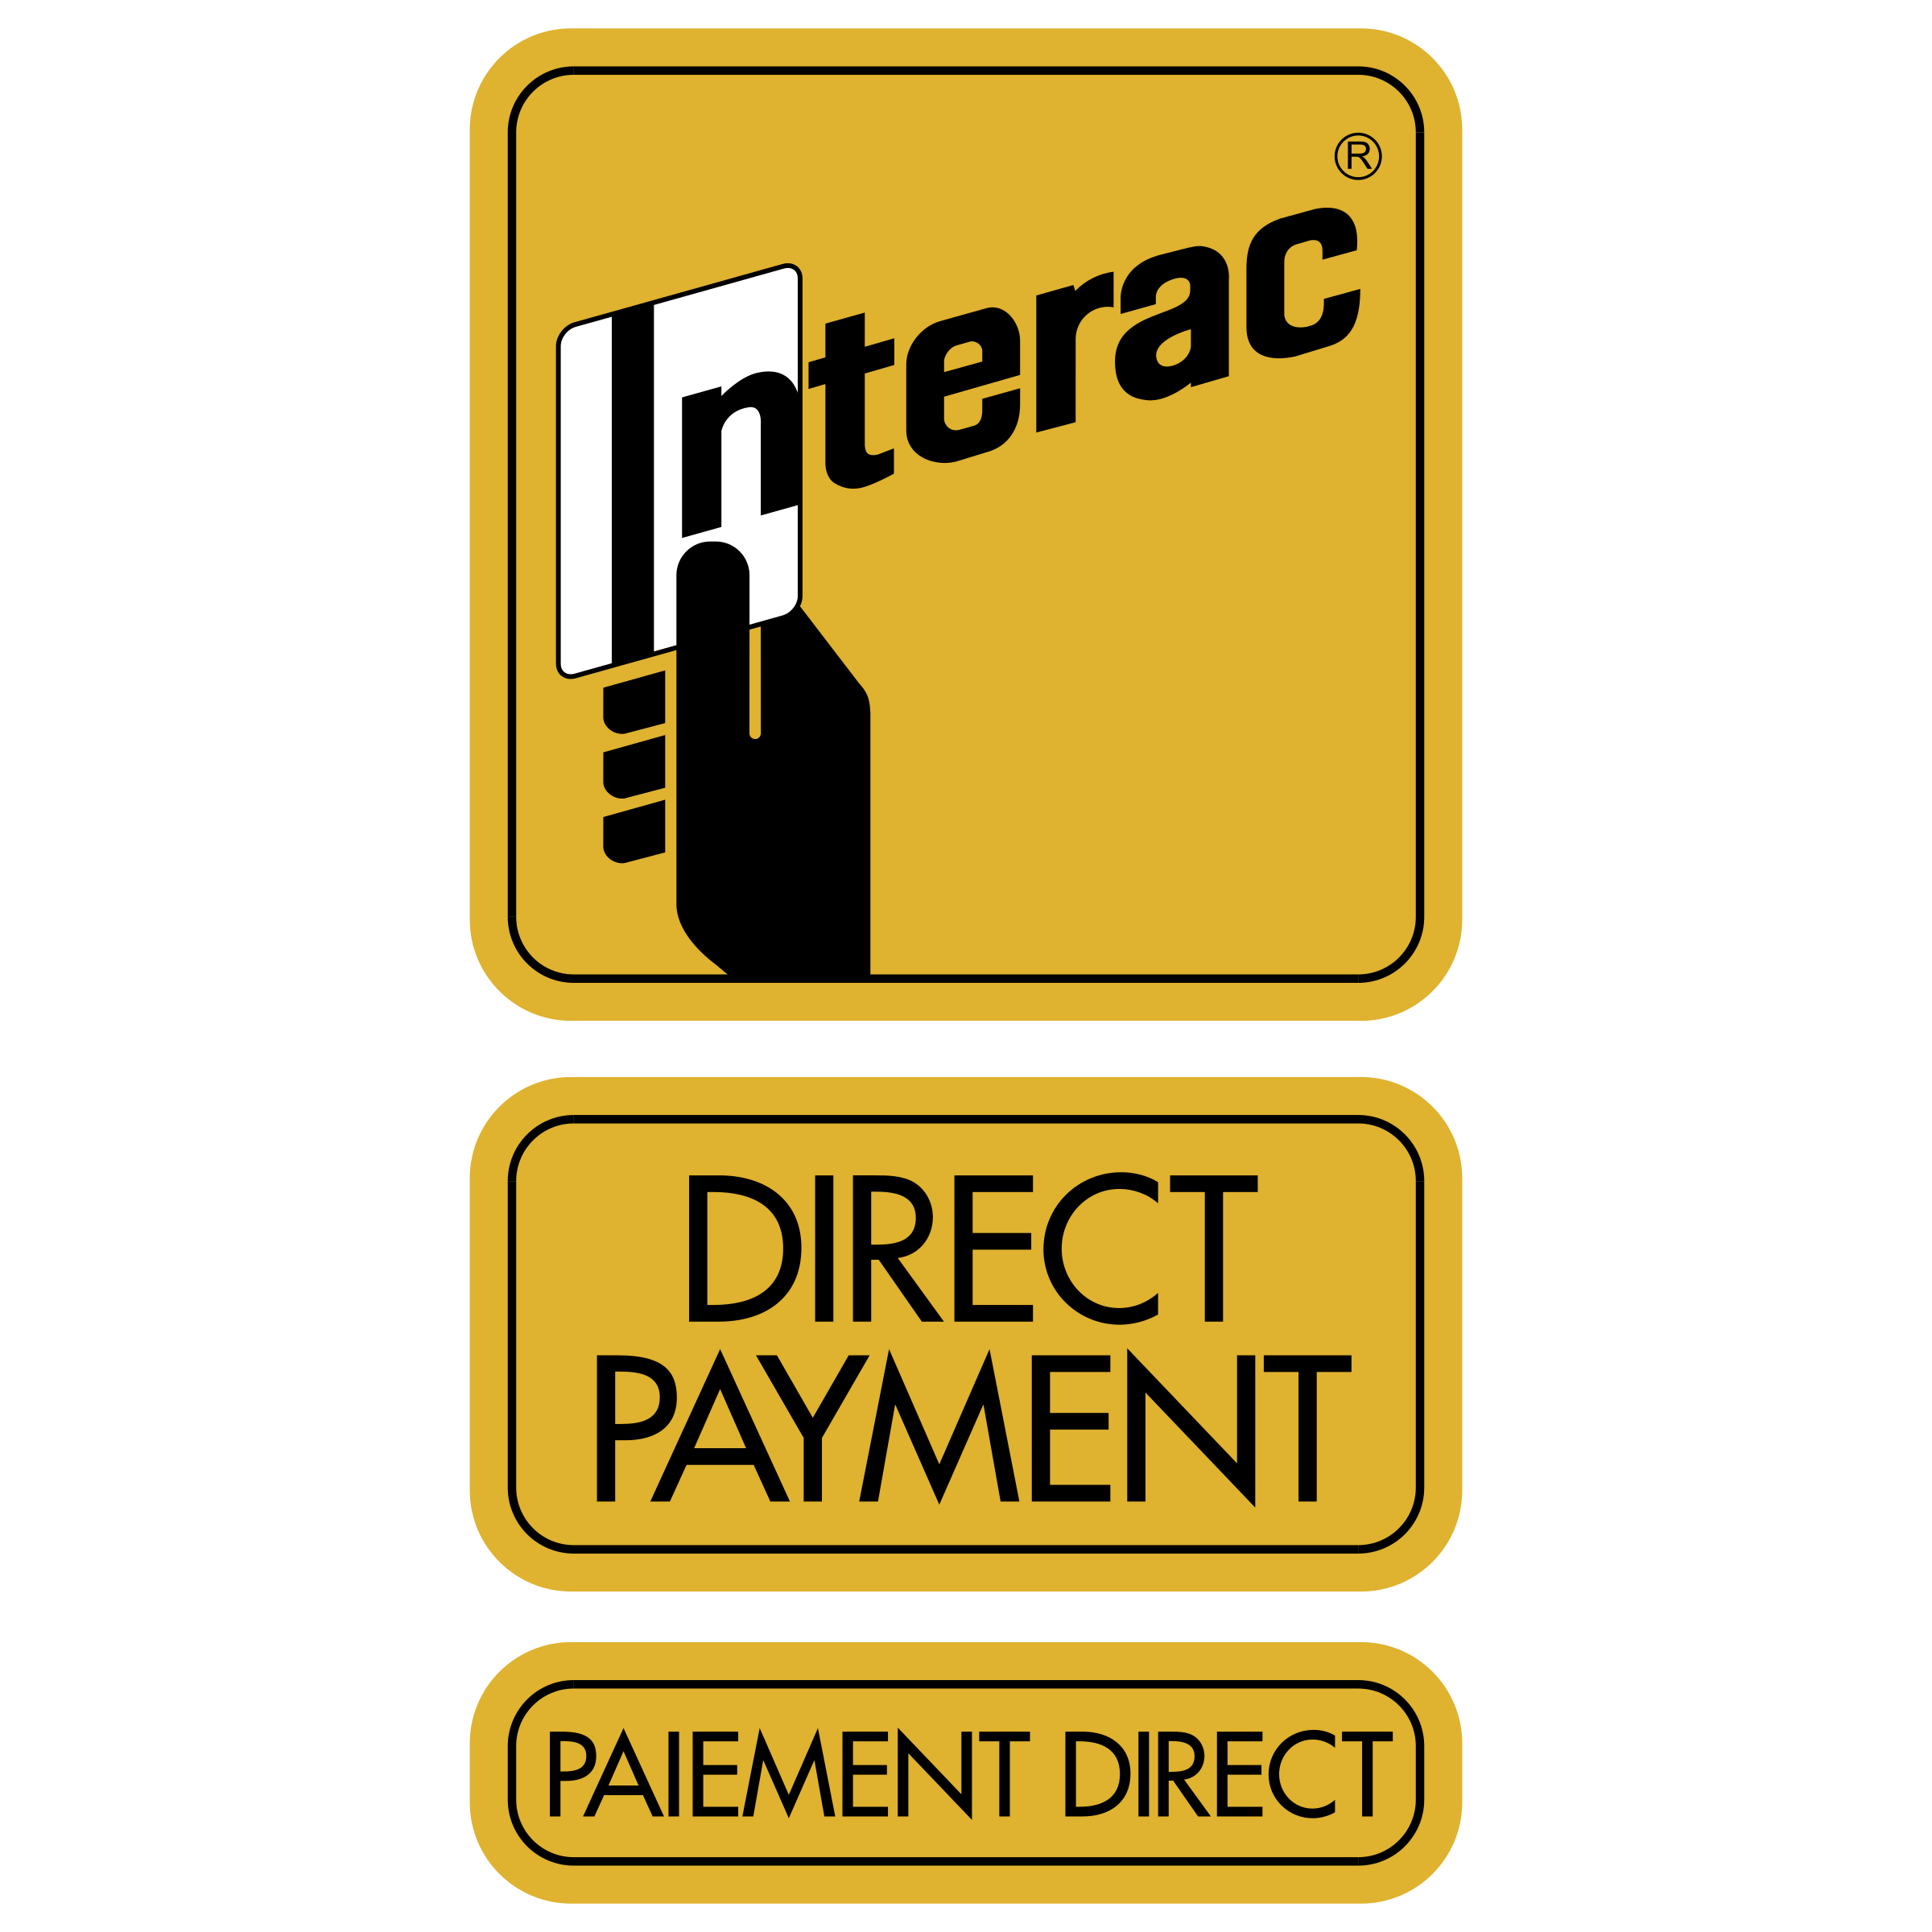 Interac Logo - Interac Logo PNG Transparent & SVG Vector - Freebie Supply